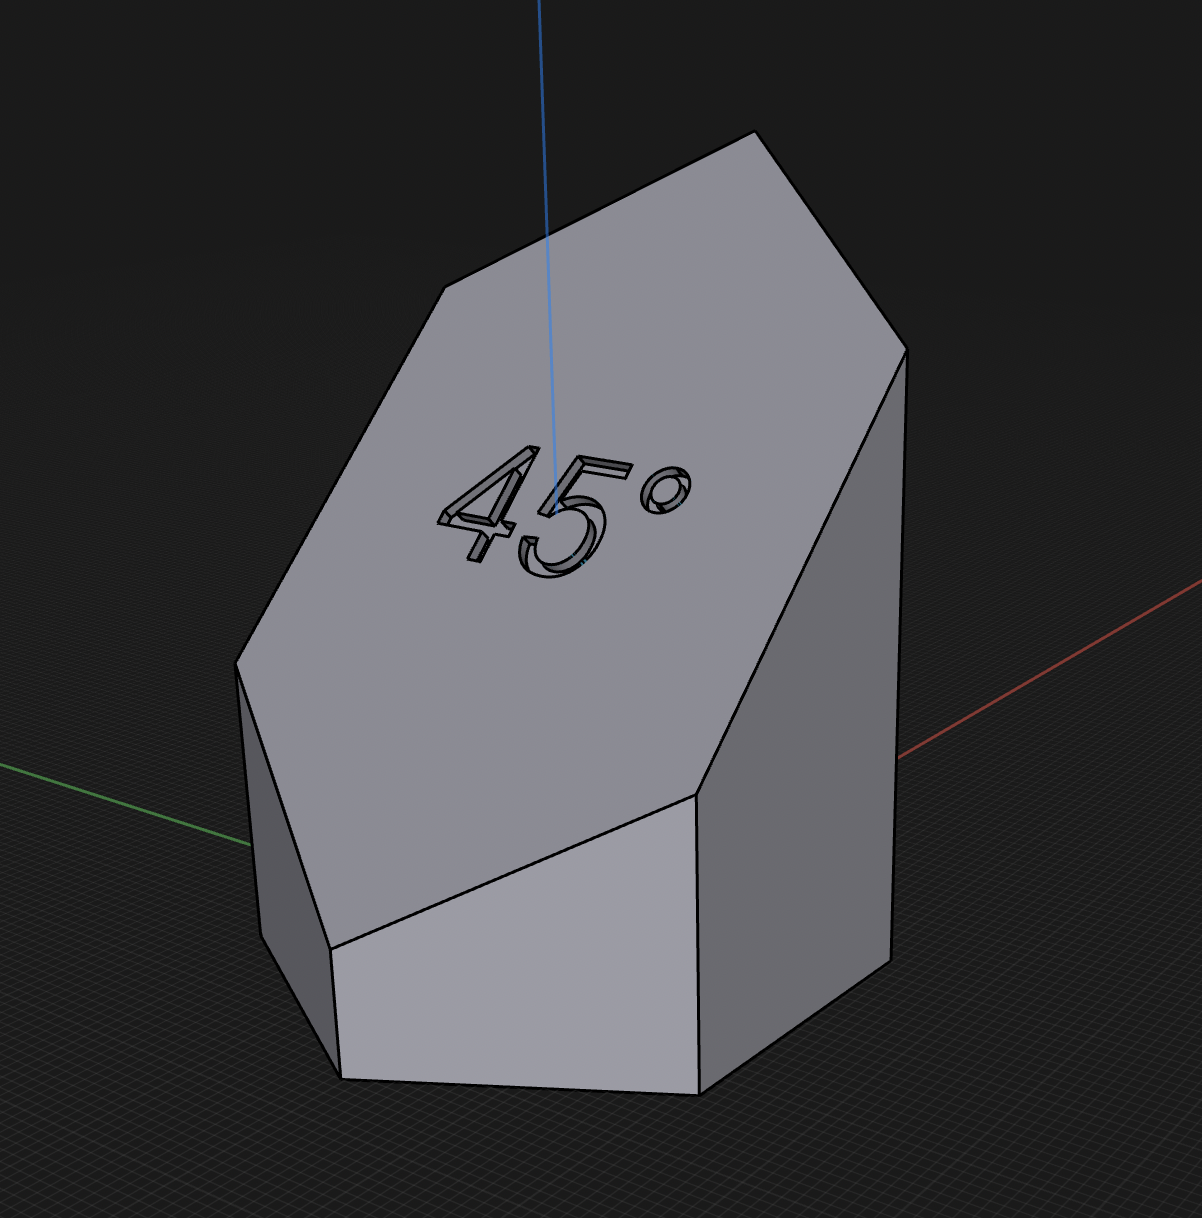 Regular hexagonal prism - cut 45°